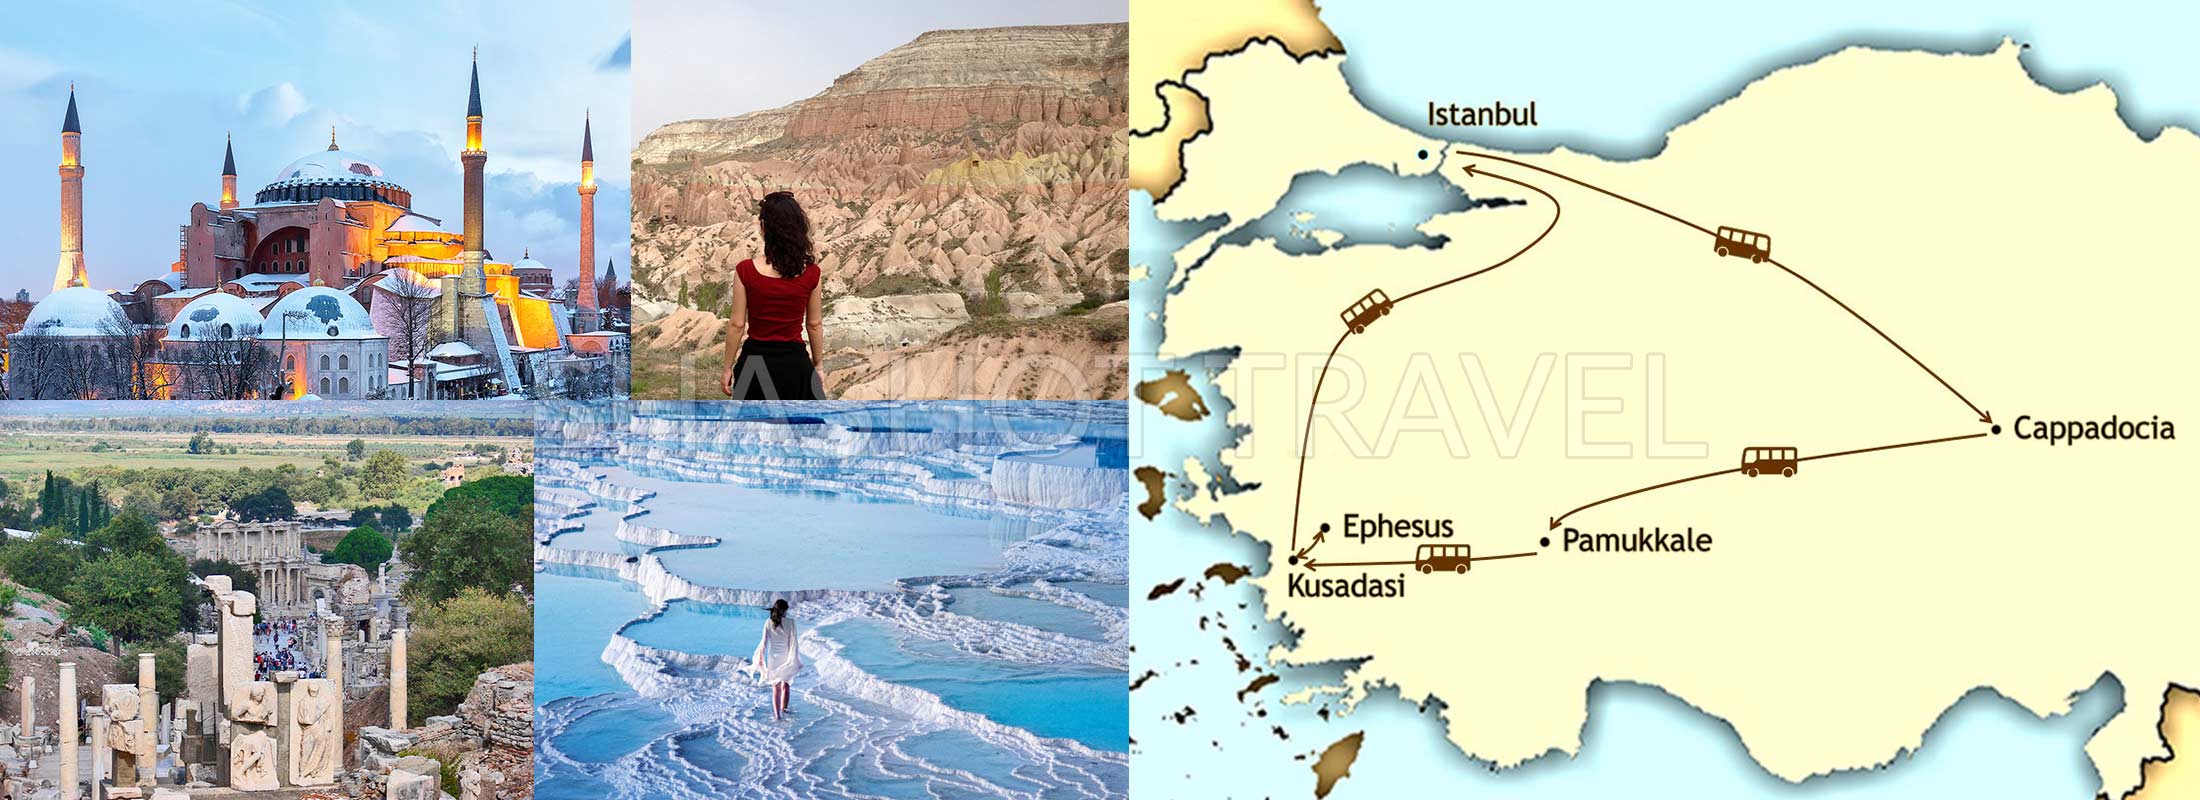 turkey-package-tours-8-days-istanbul-hagia-sophia-museum-blue-mosque-bosphorus-cappadocia-virgin-mary-house-ephesus-pamukkale-hierapolis-map